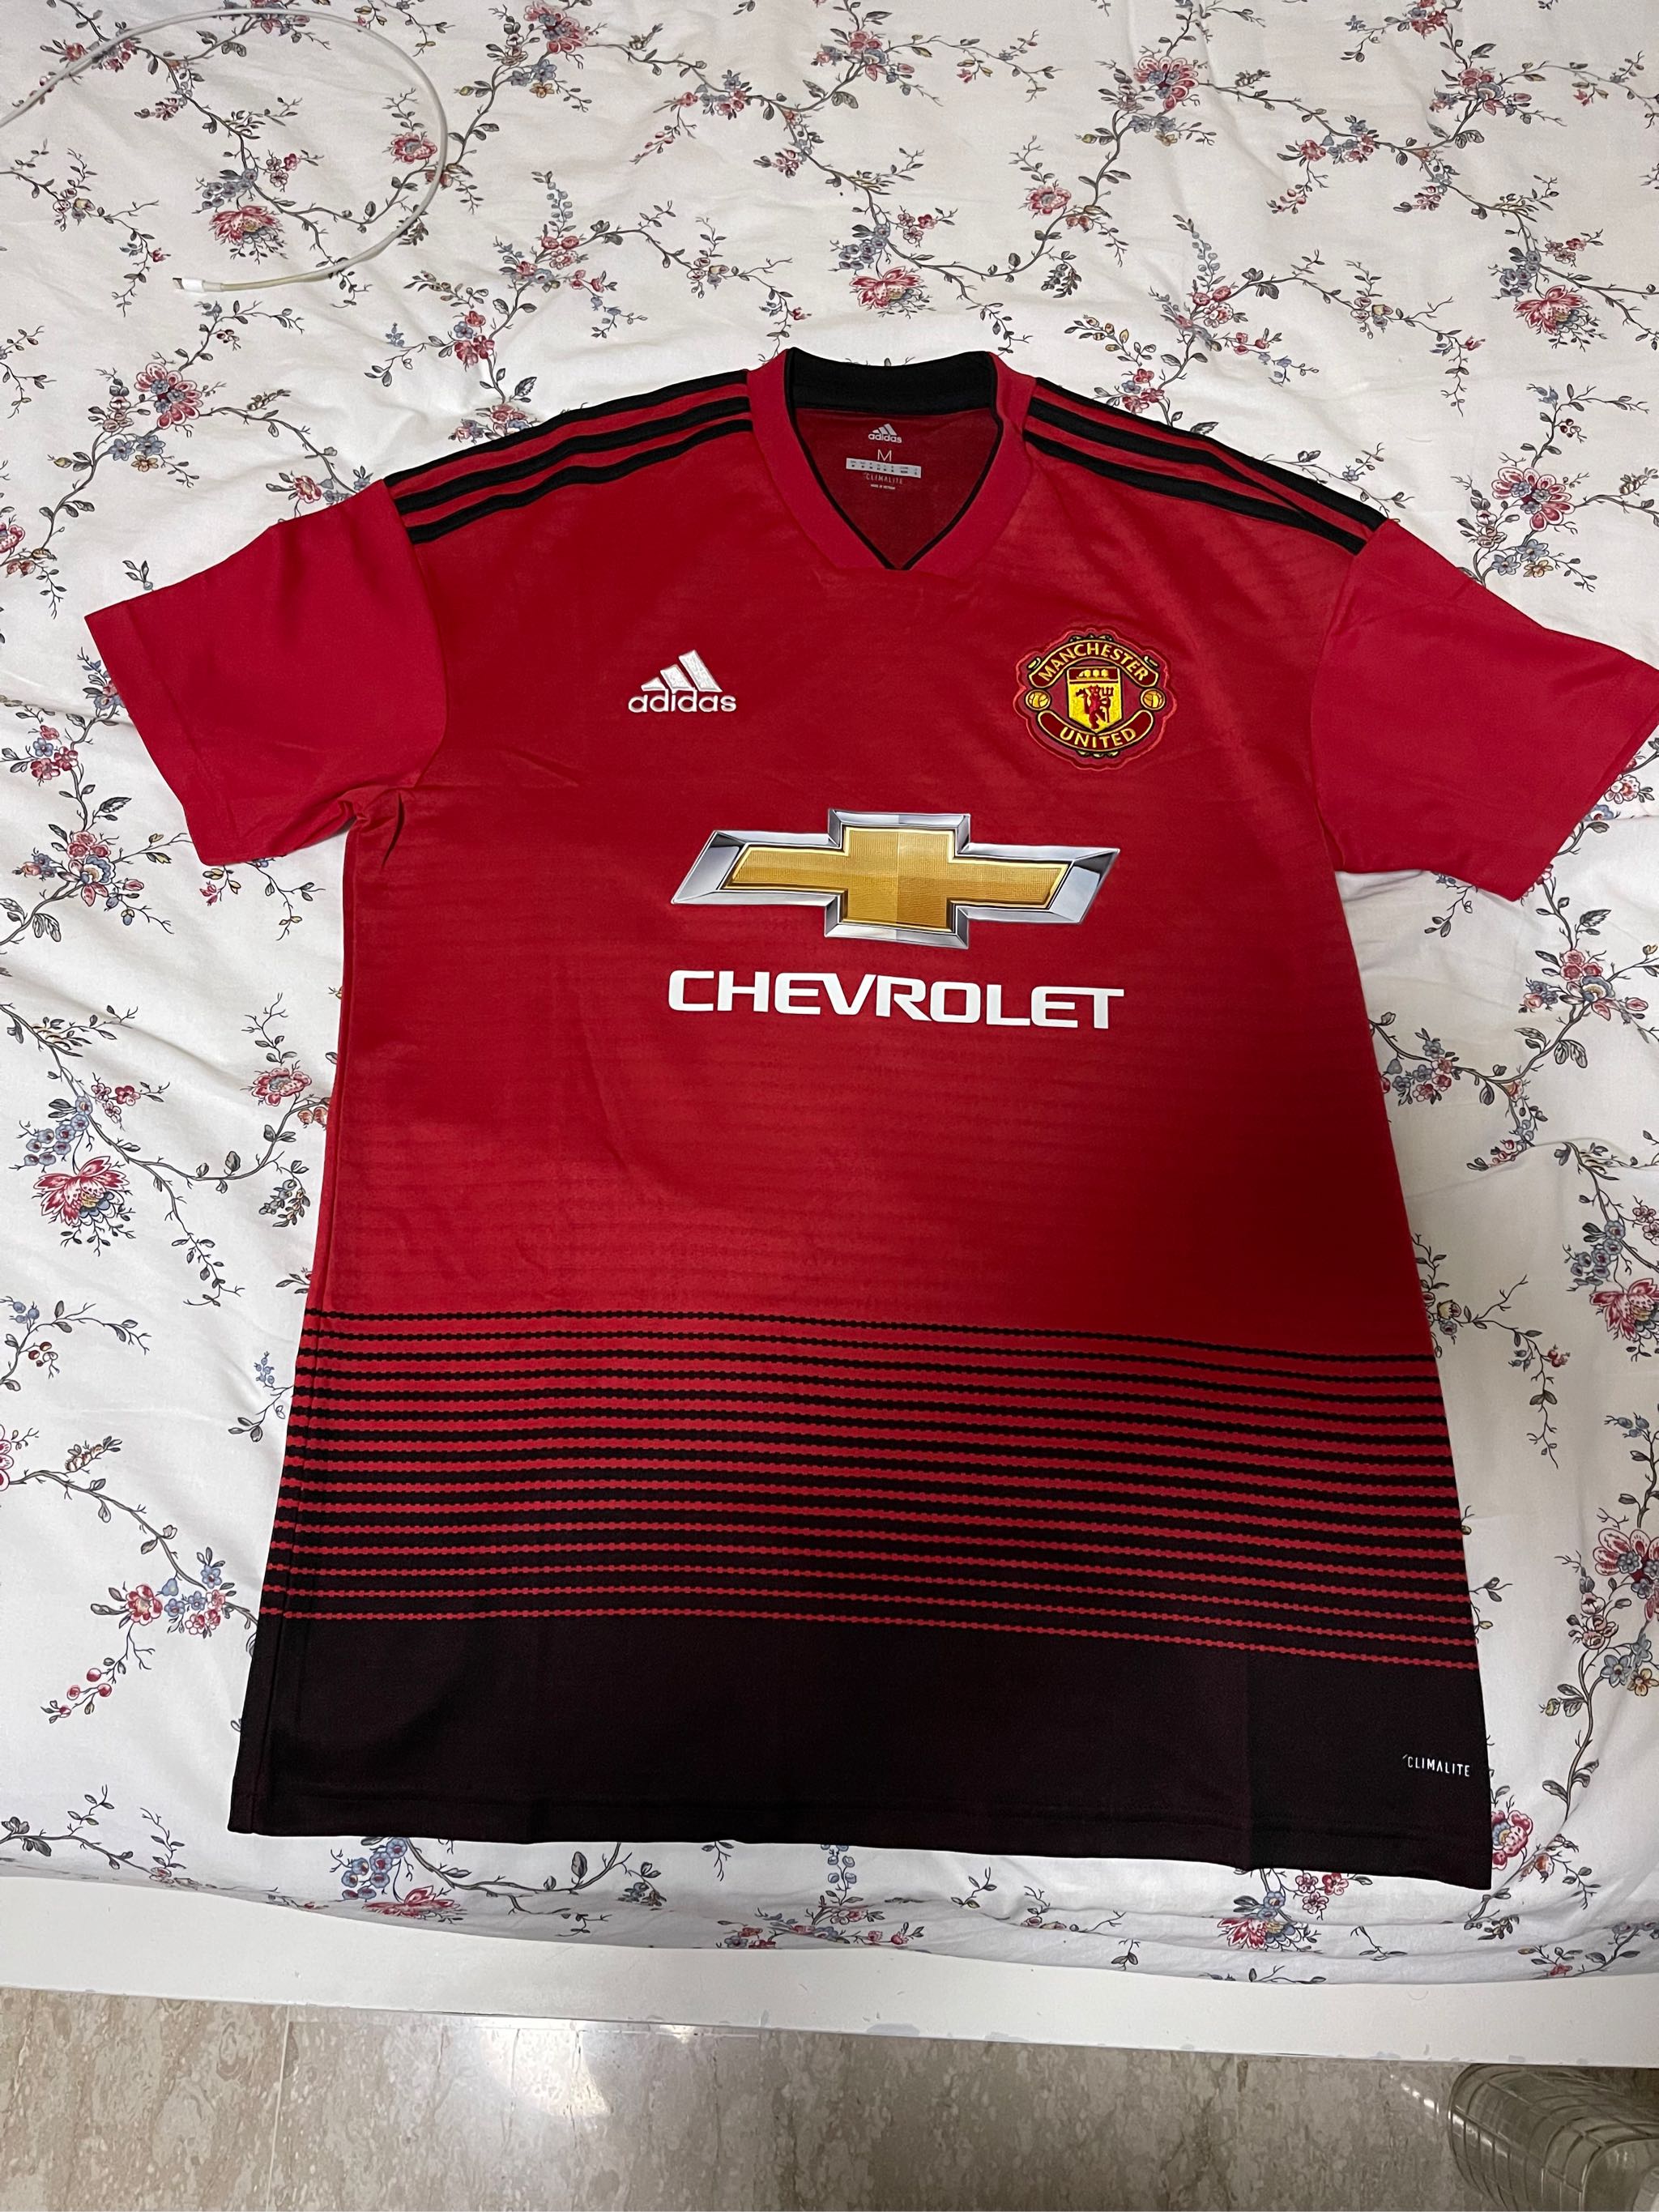 ADIDAS CG0040 Manchester United Football Soccer Home Shirt 2018-19 Size  Medium NEW